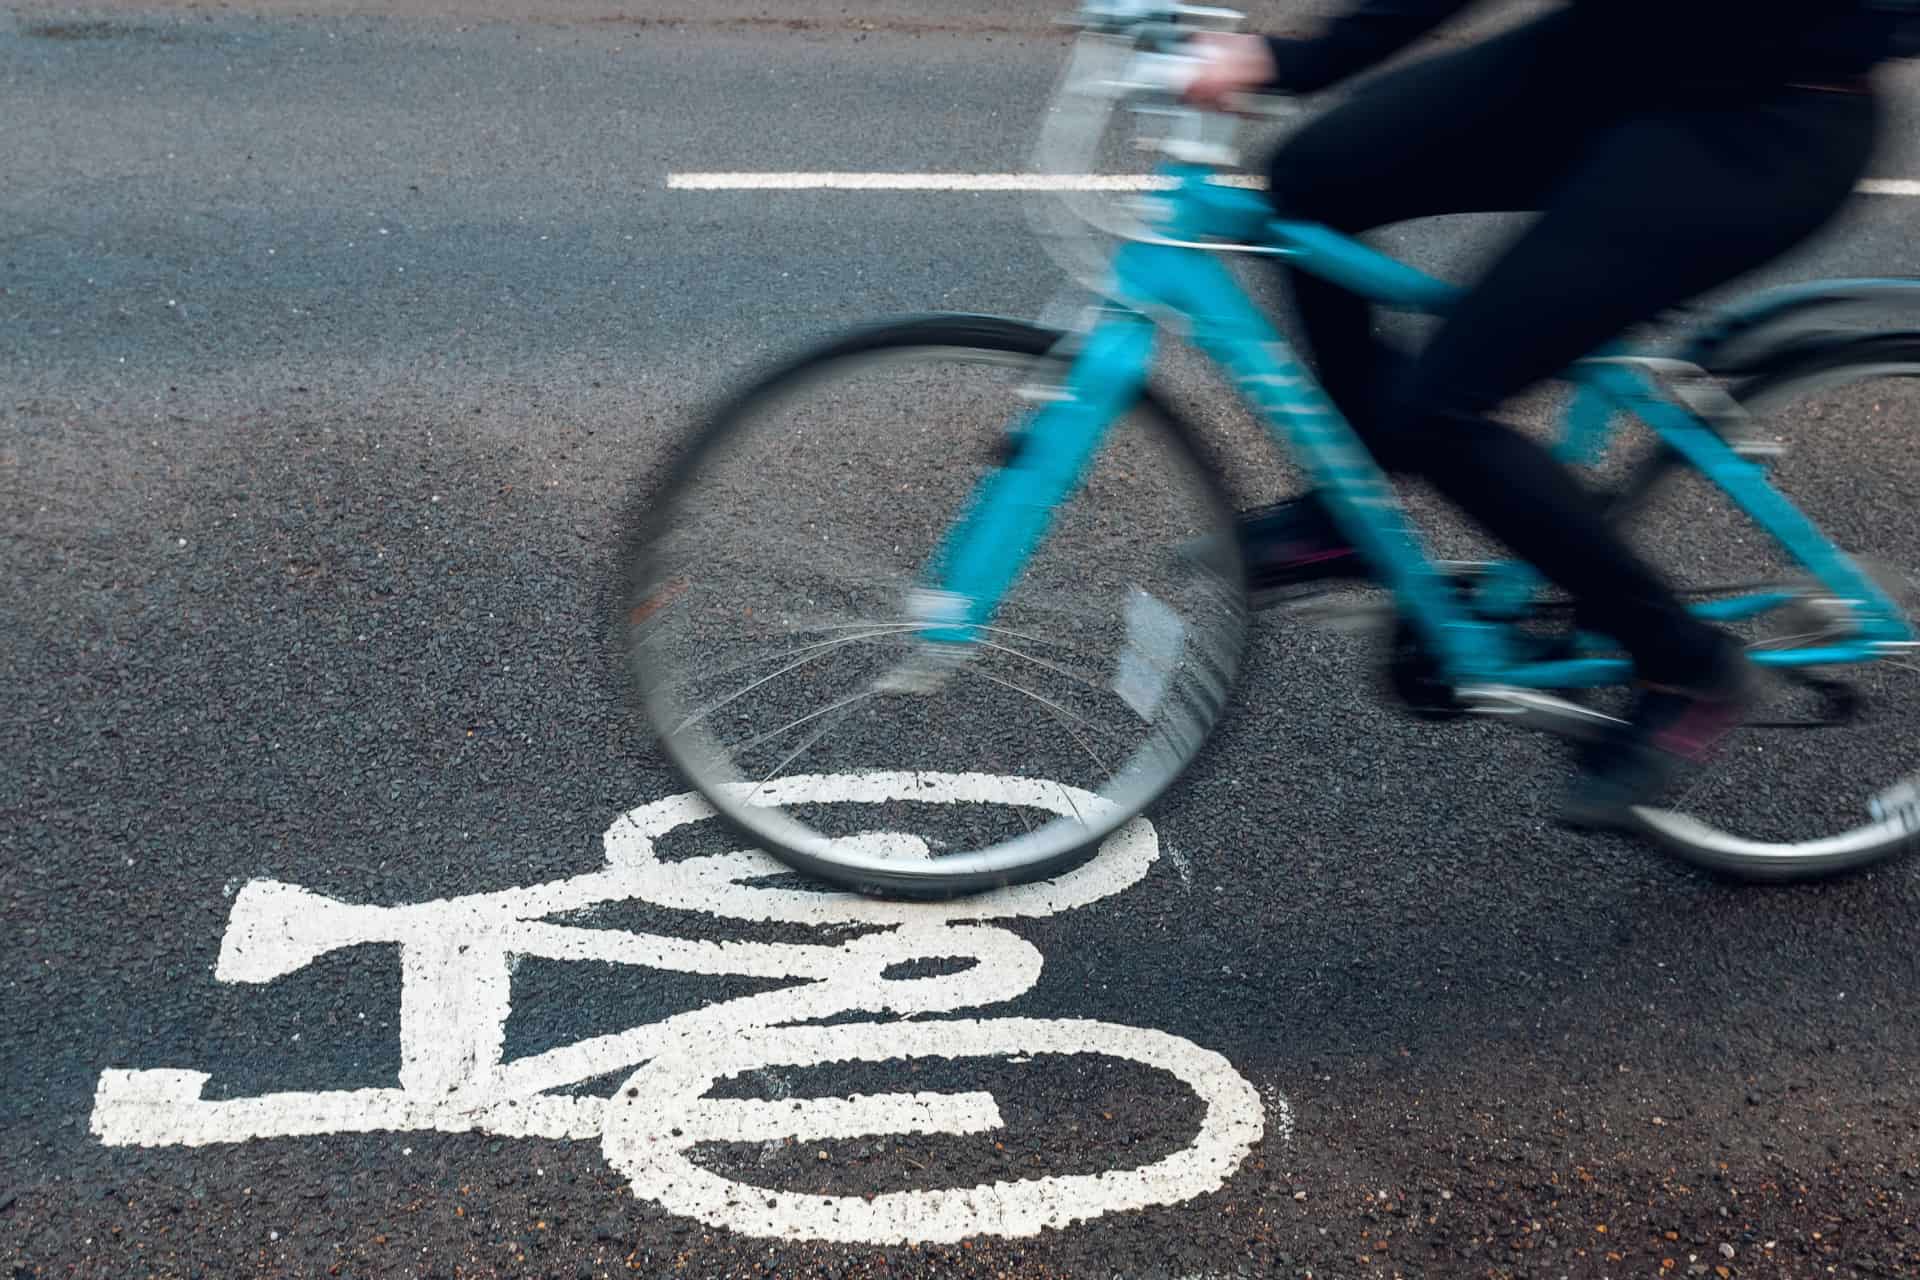 a blury bike speeding along a road where the bike lane symbol is clearly visible.